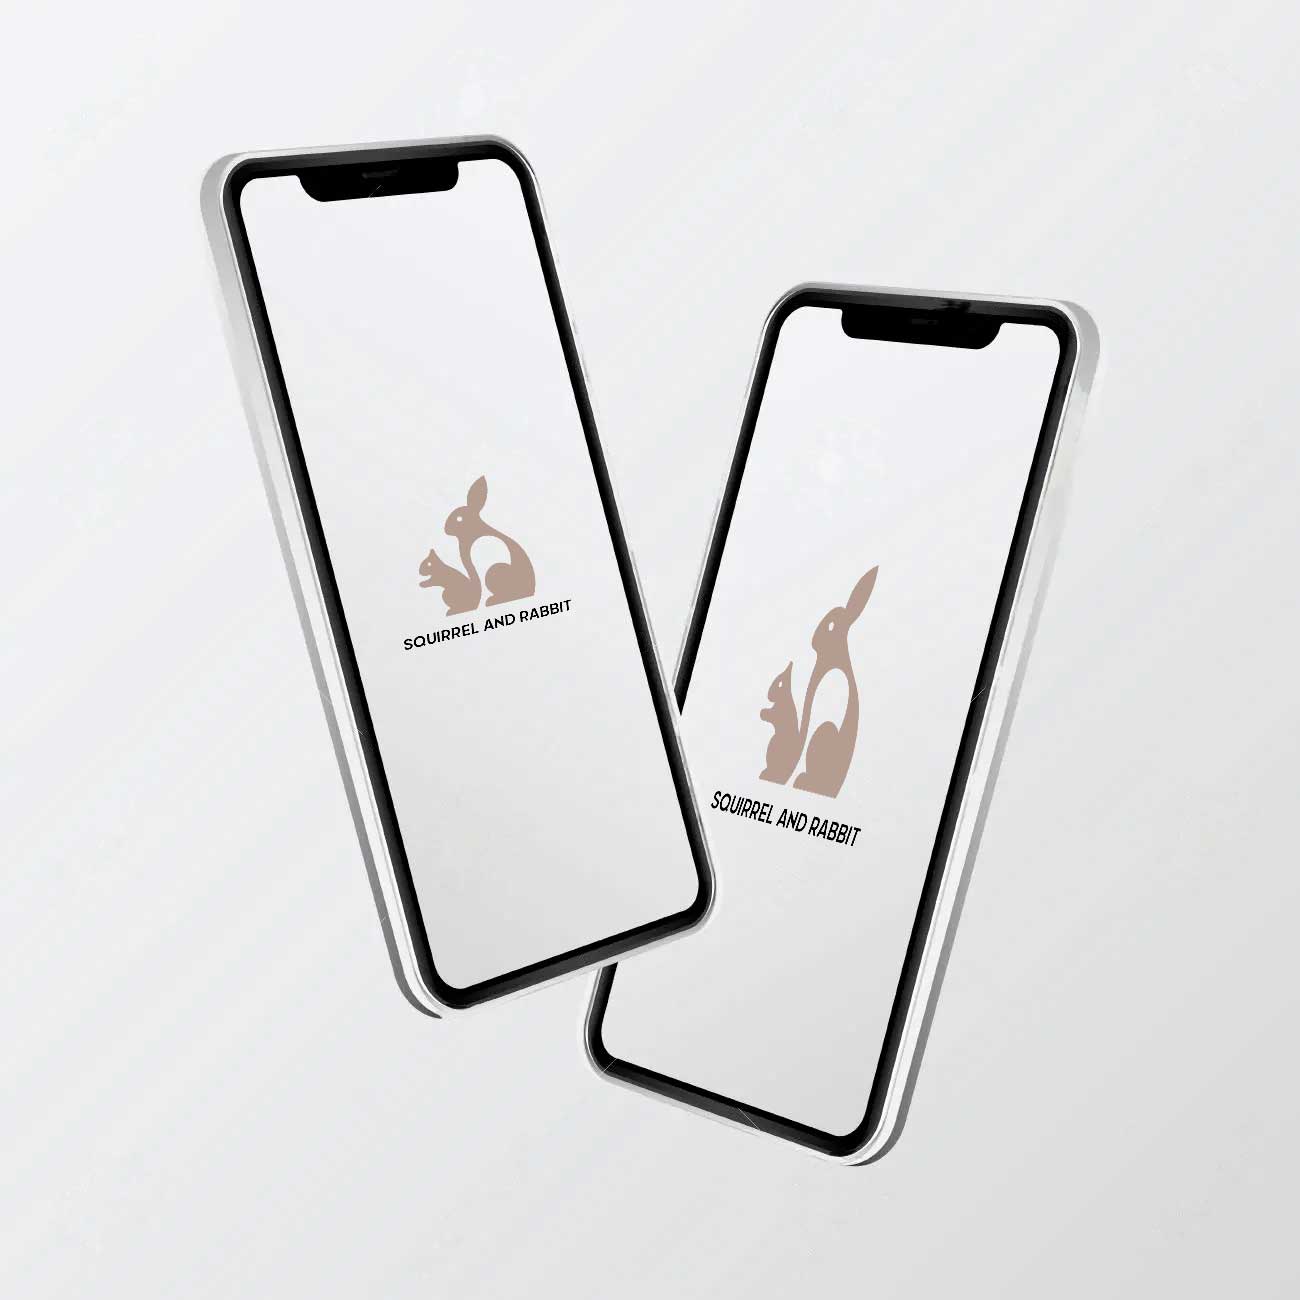 Squirrel and Rabbit Logo smartphone mockup.